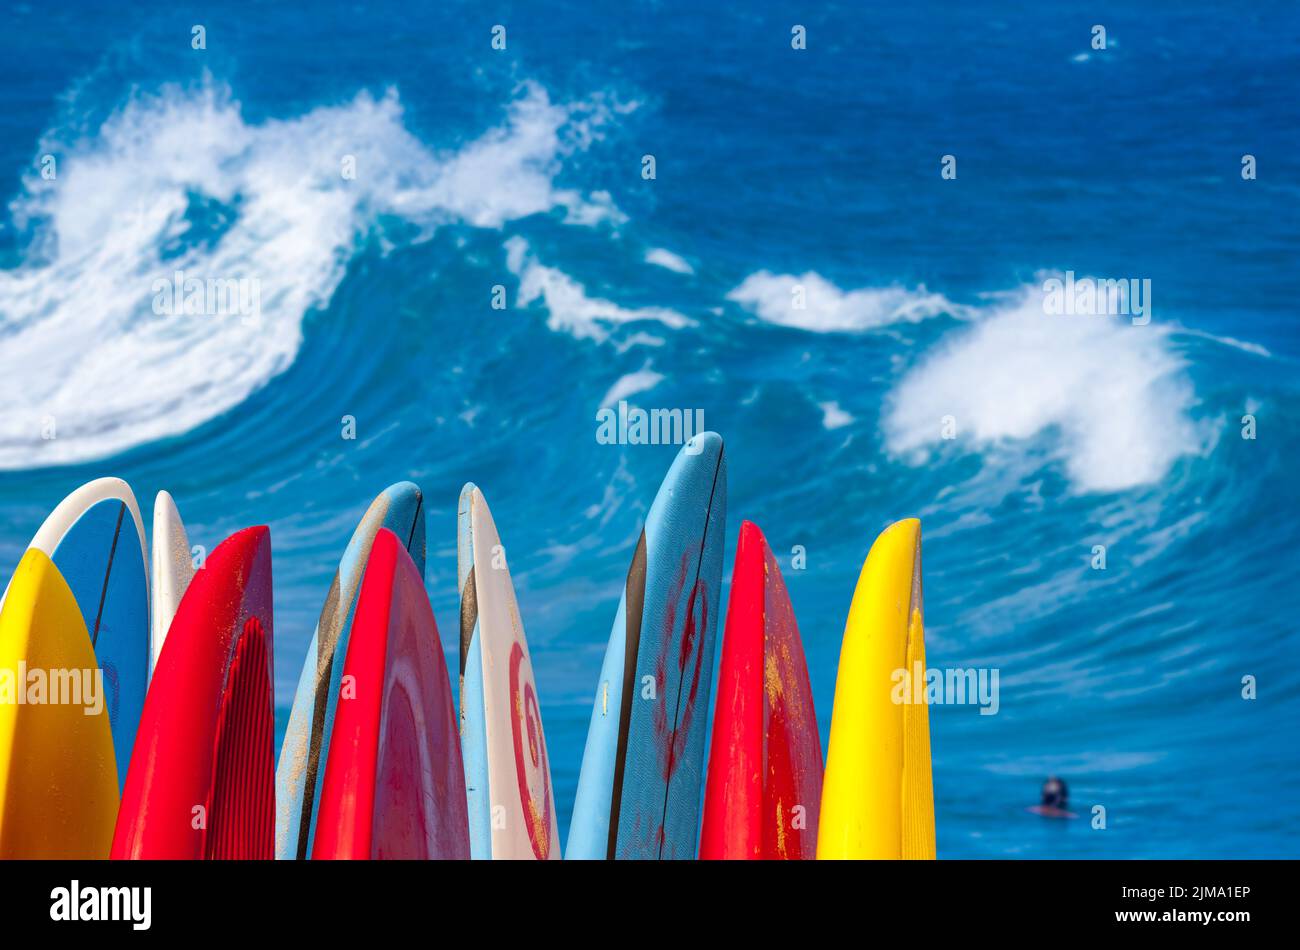 Powerful waves break at Lumahai Beach, Kauai with Surfboards Stock Photo